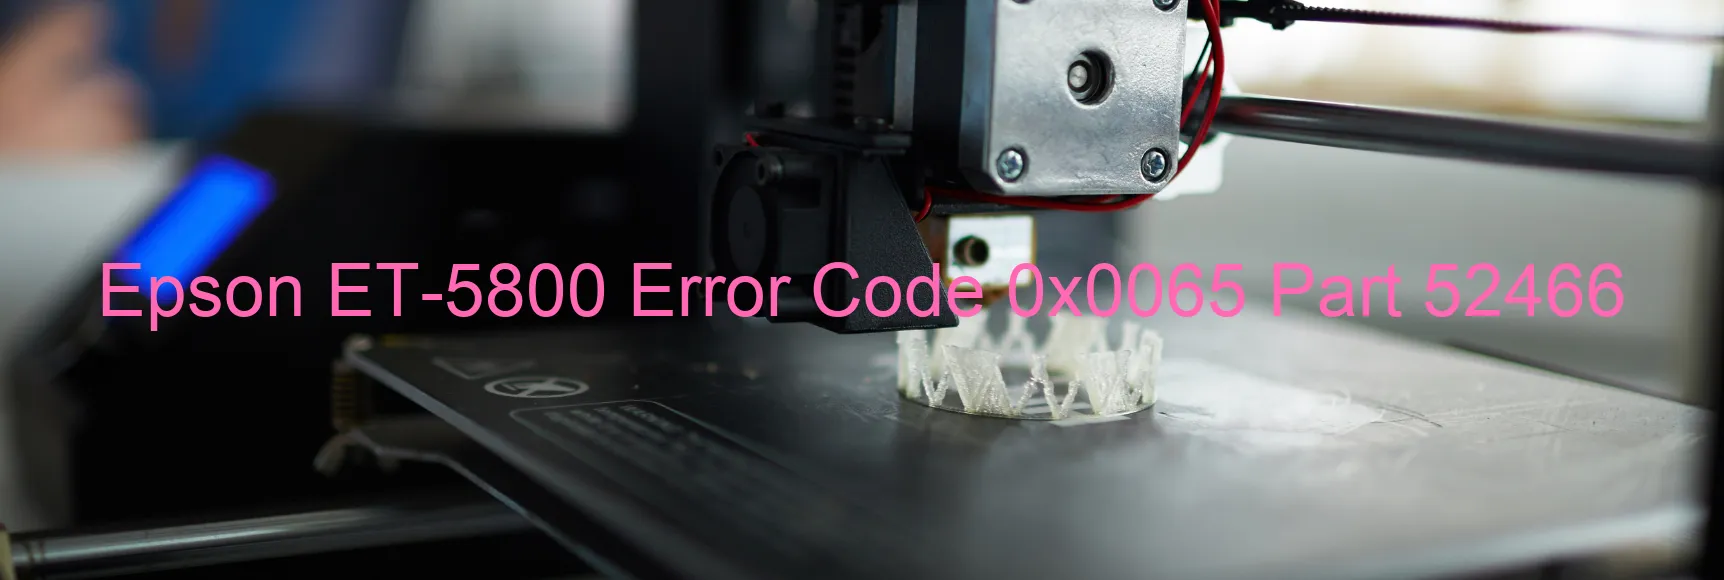 Epson ET-5800 Error Code 0x0065 Part 52466